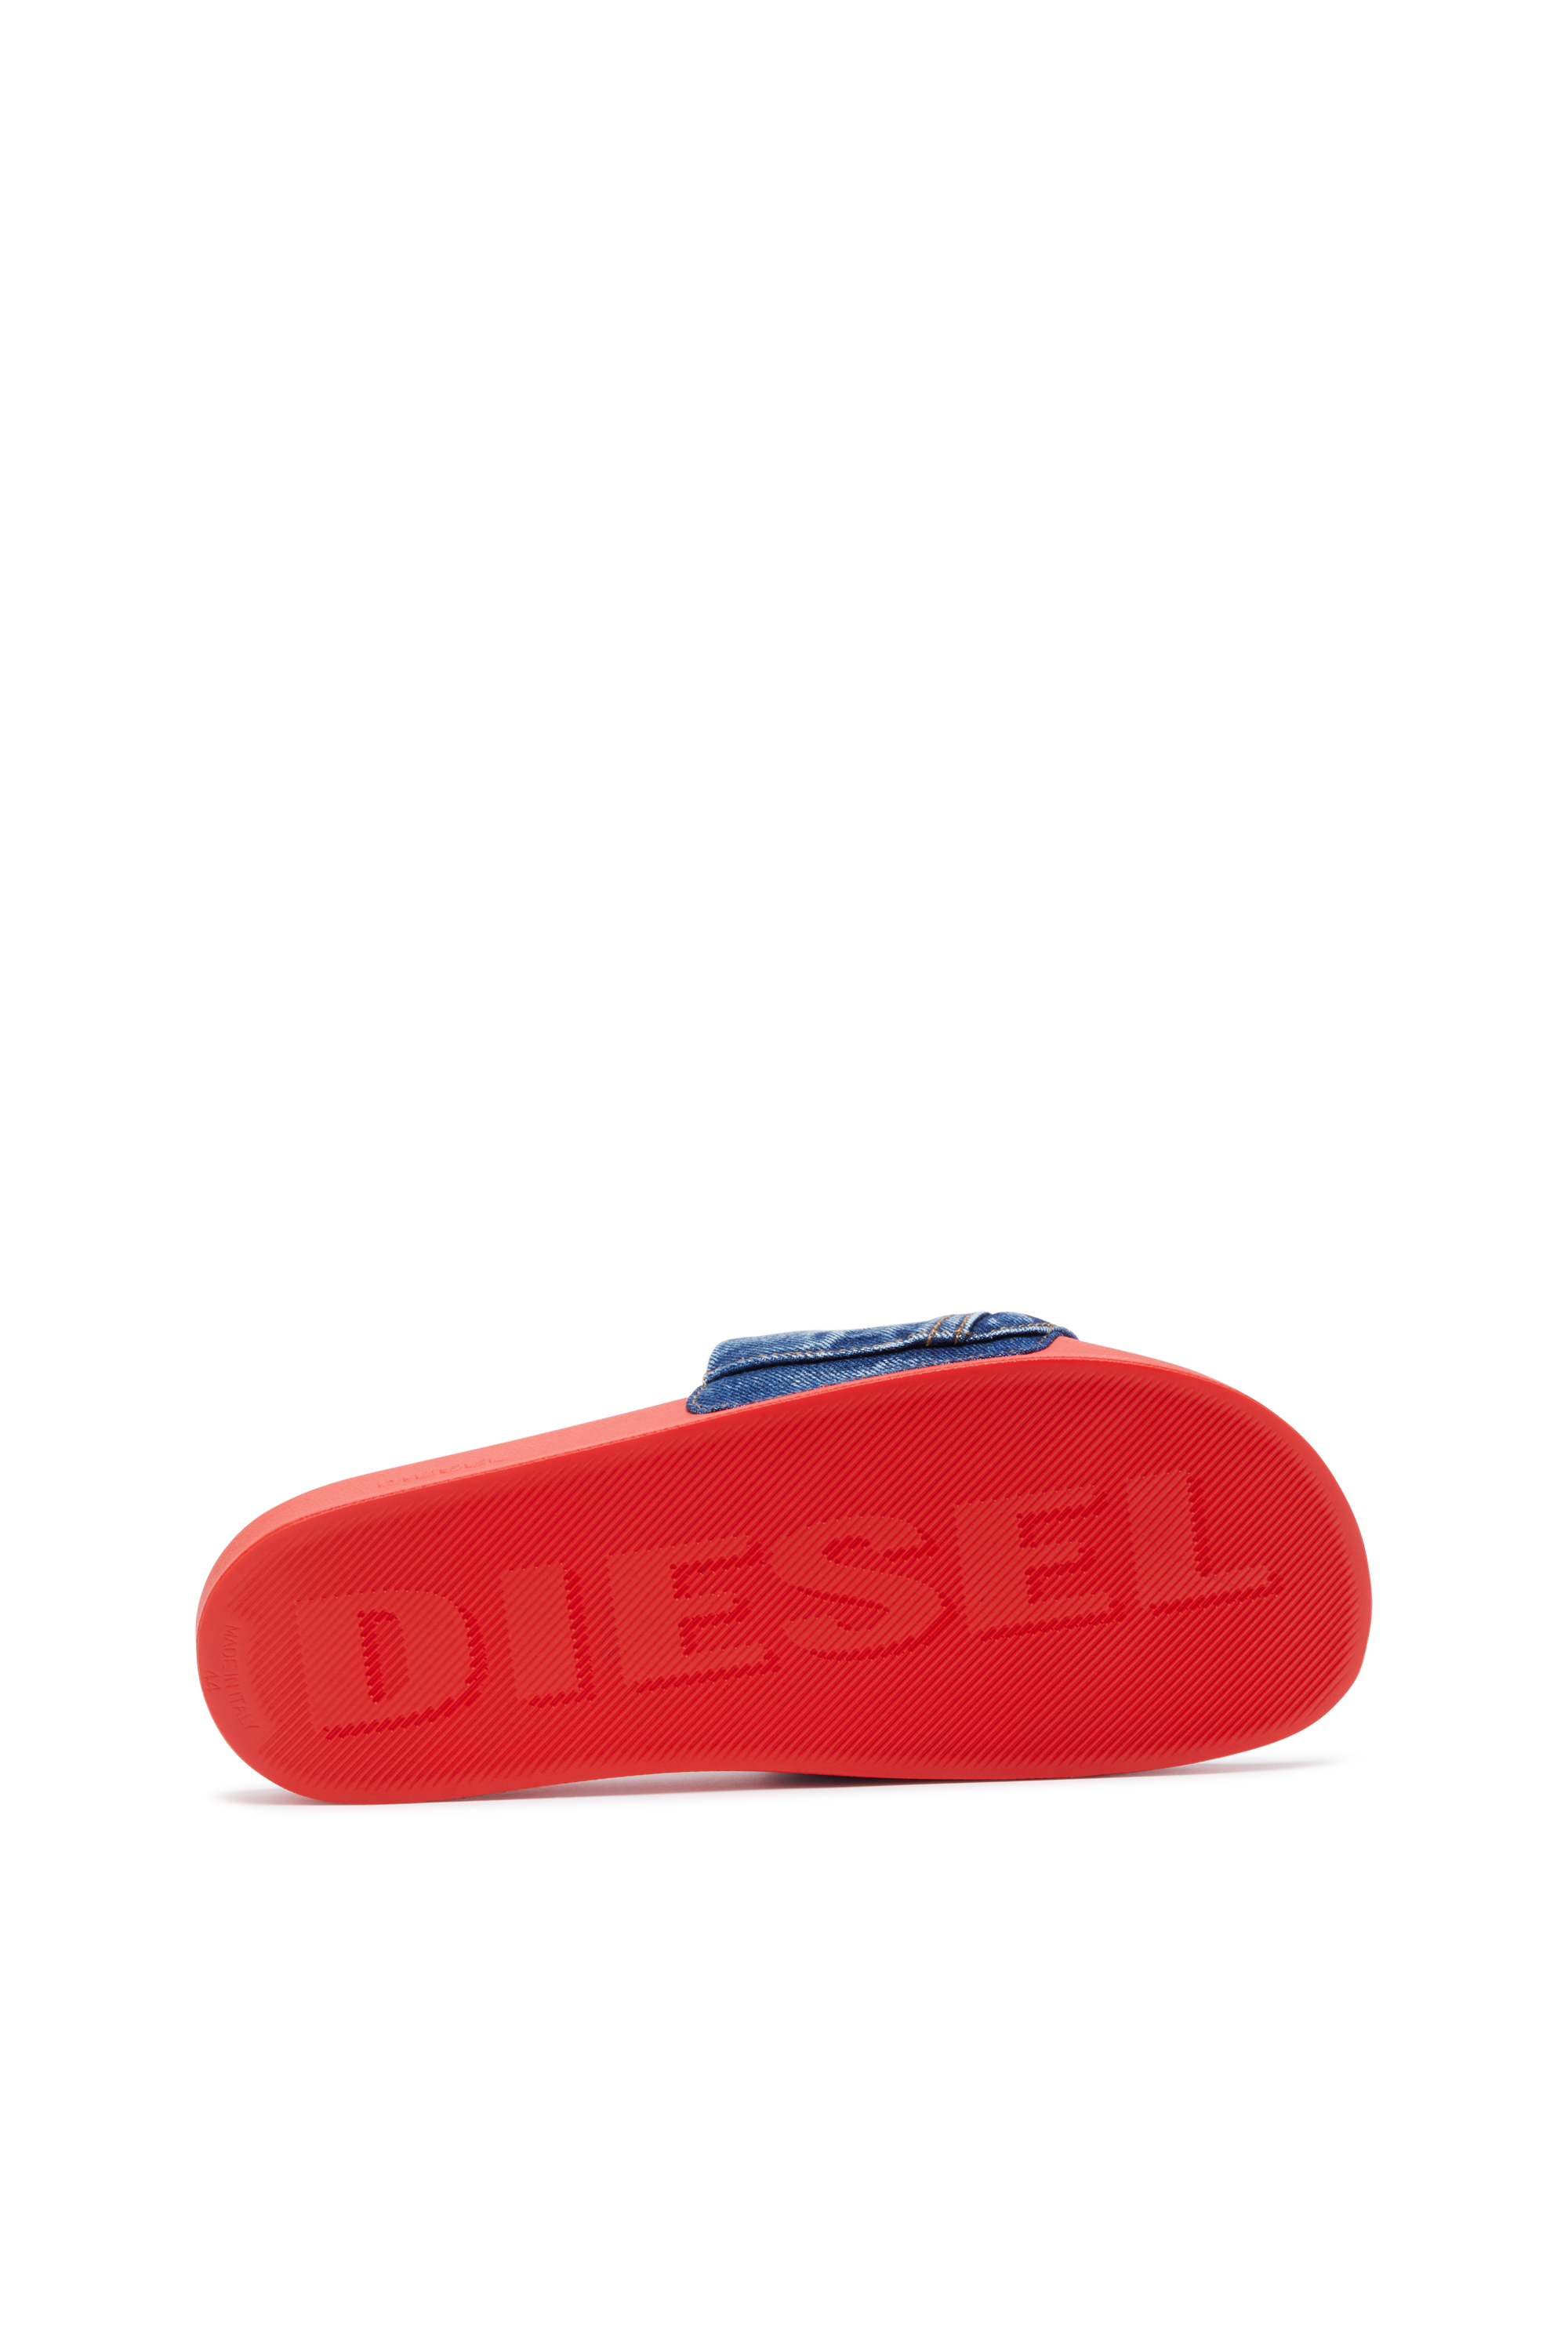 Diesel - SA-MAYEMI PK, Blau/Rot - Image 4